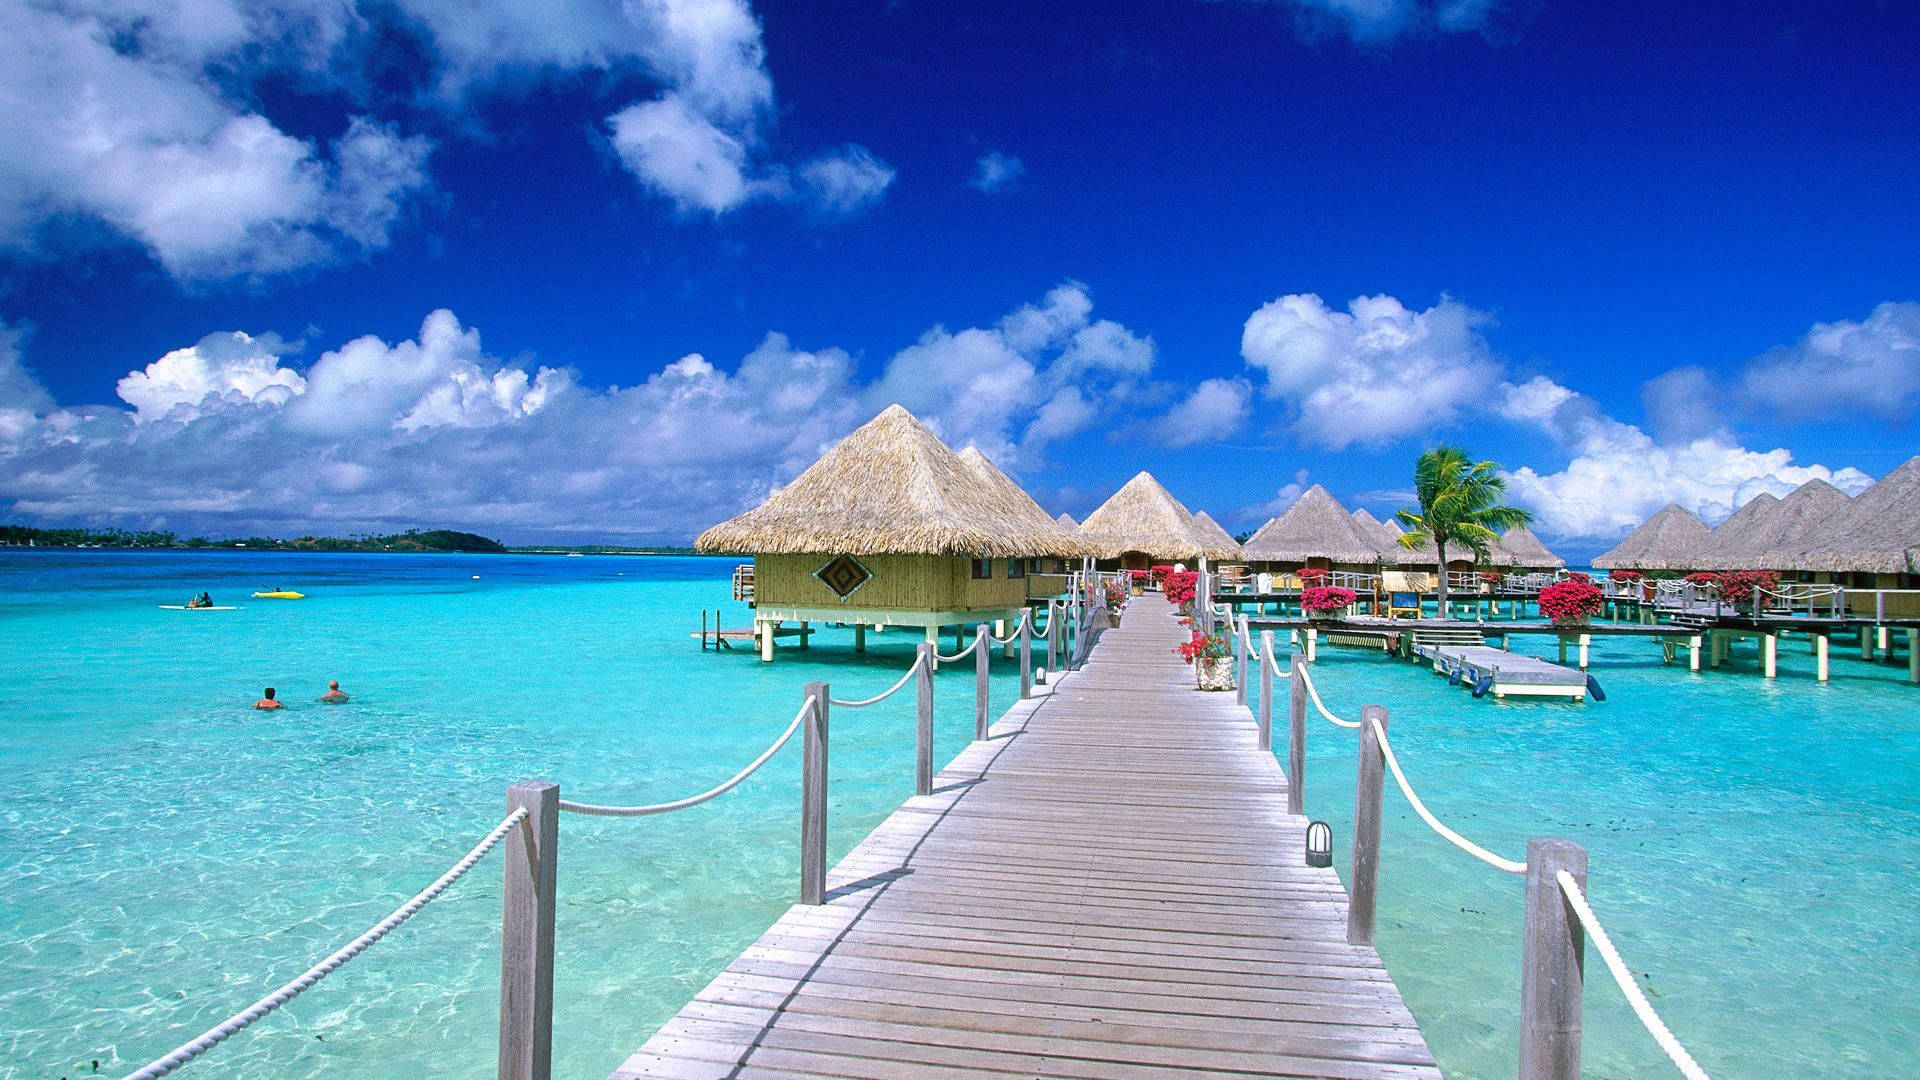 Nipa Huts On Beach In Maldives Desktop Background